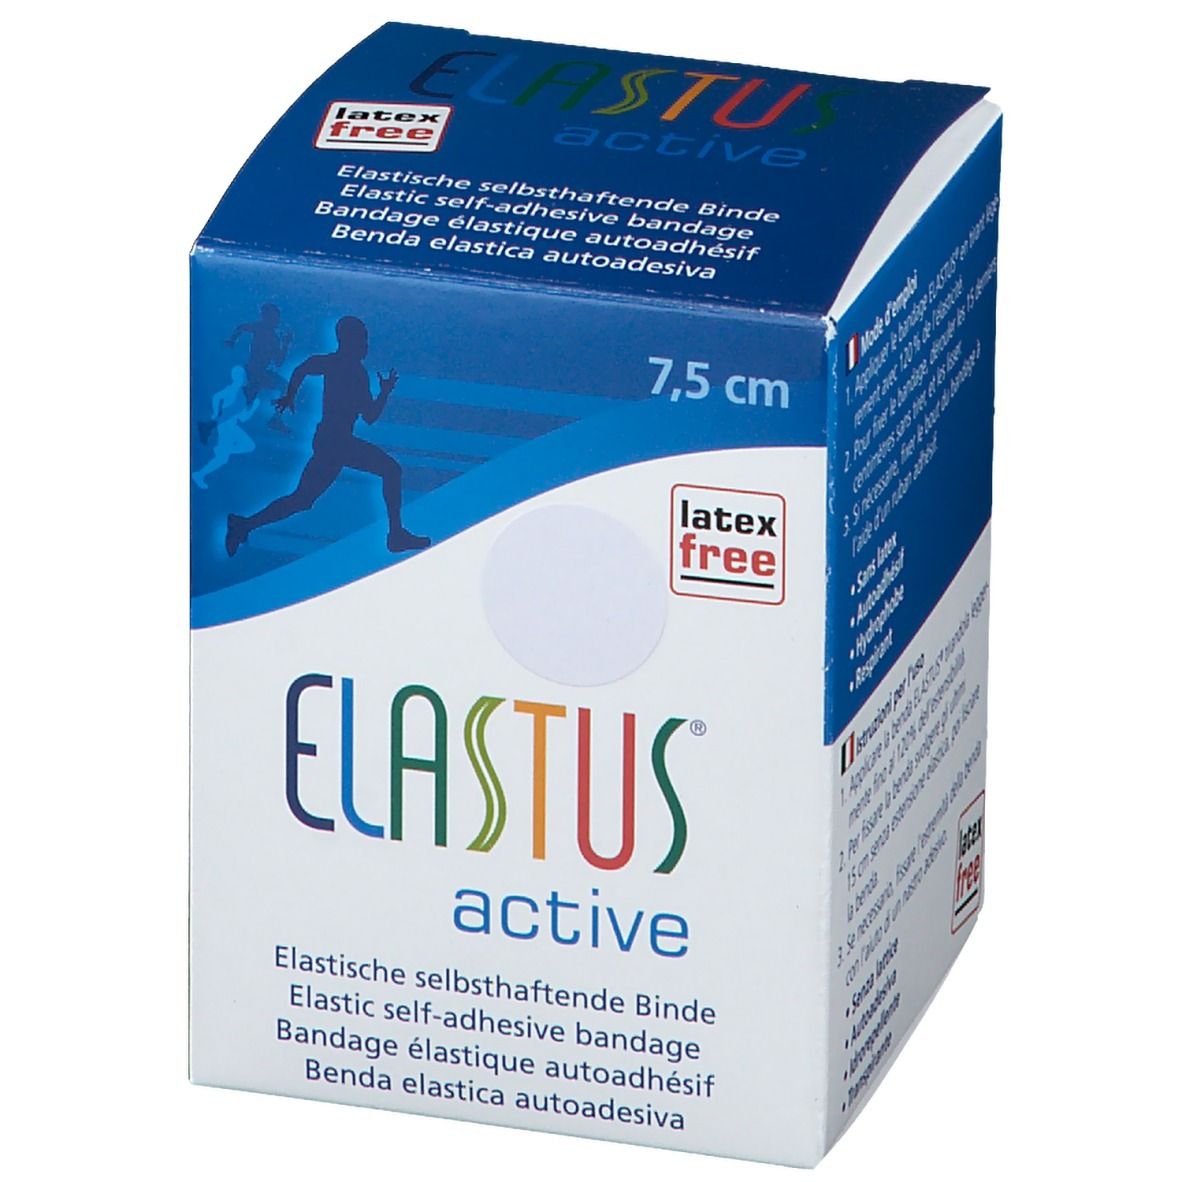 ELASTUS® Active Sportbandage 7,5 cm x 4,6 m